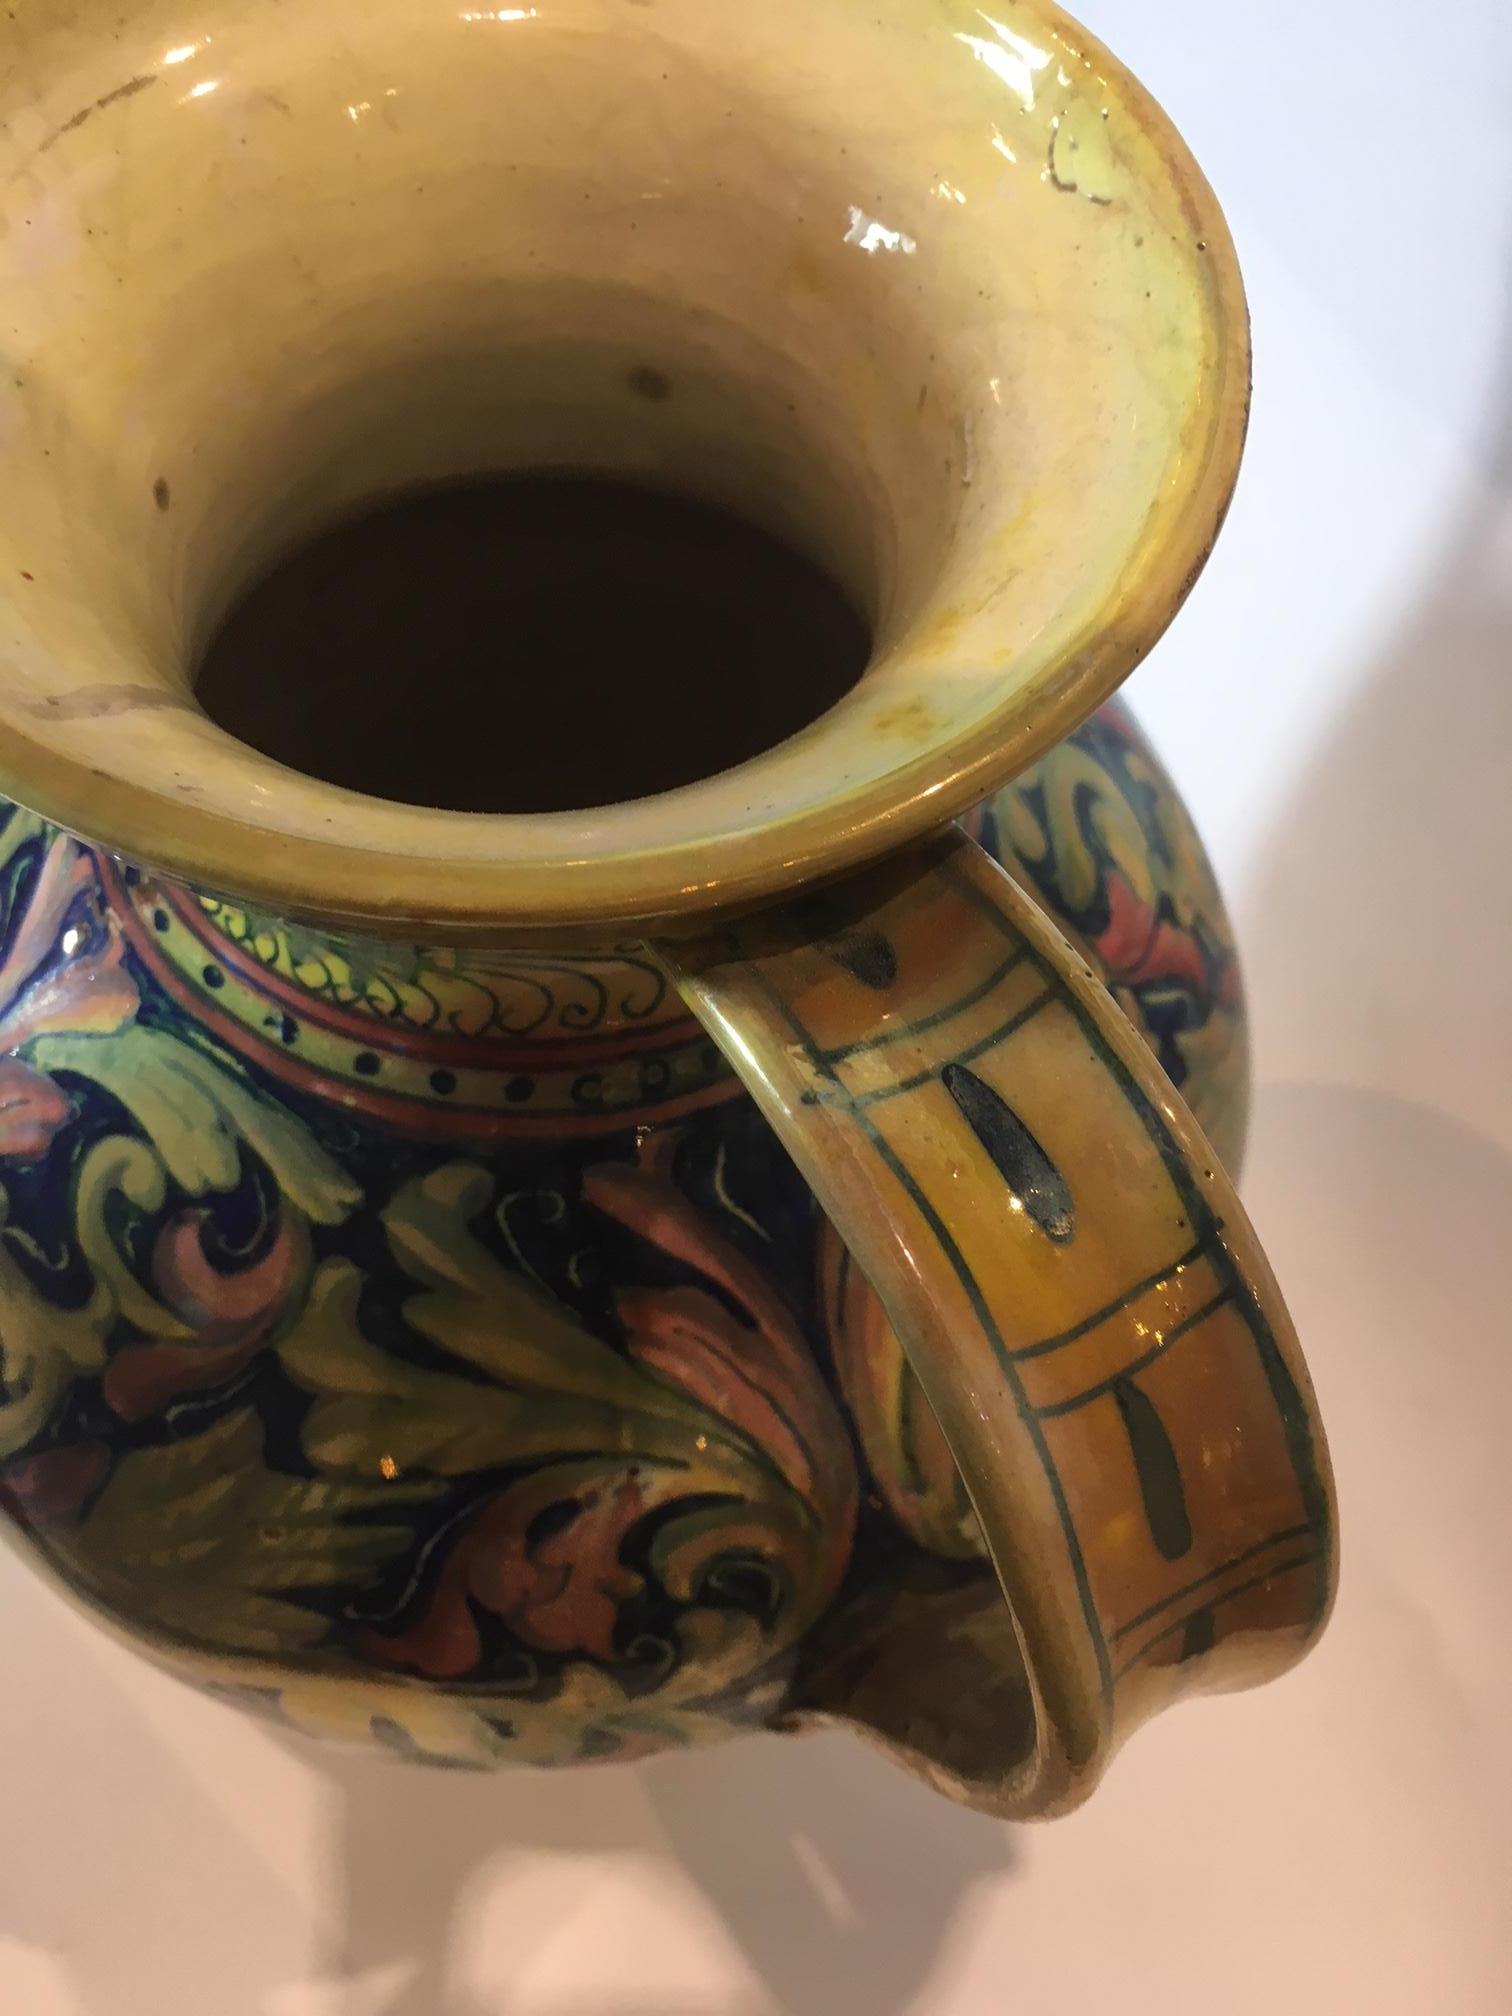 Polished 20th Century Renaissence Revival Polychrome Drawings Pottery Gualdo Tadino Vase For Sale